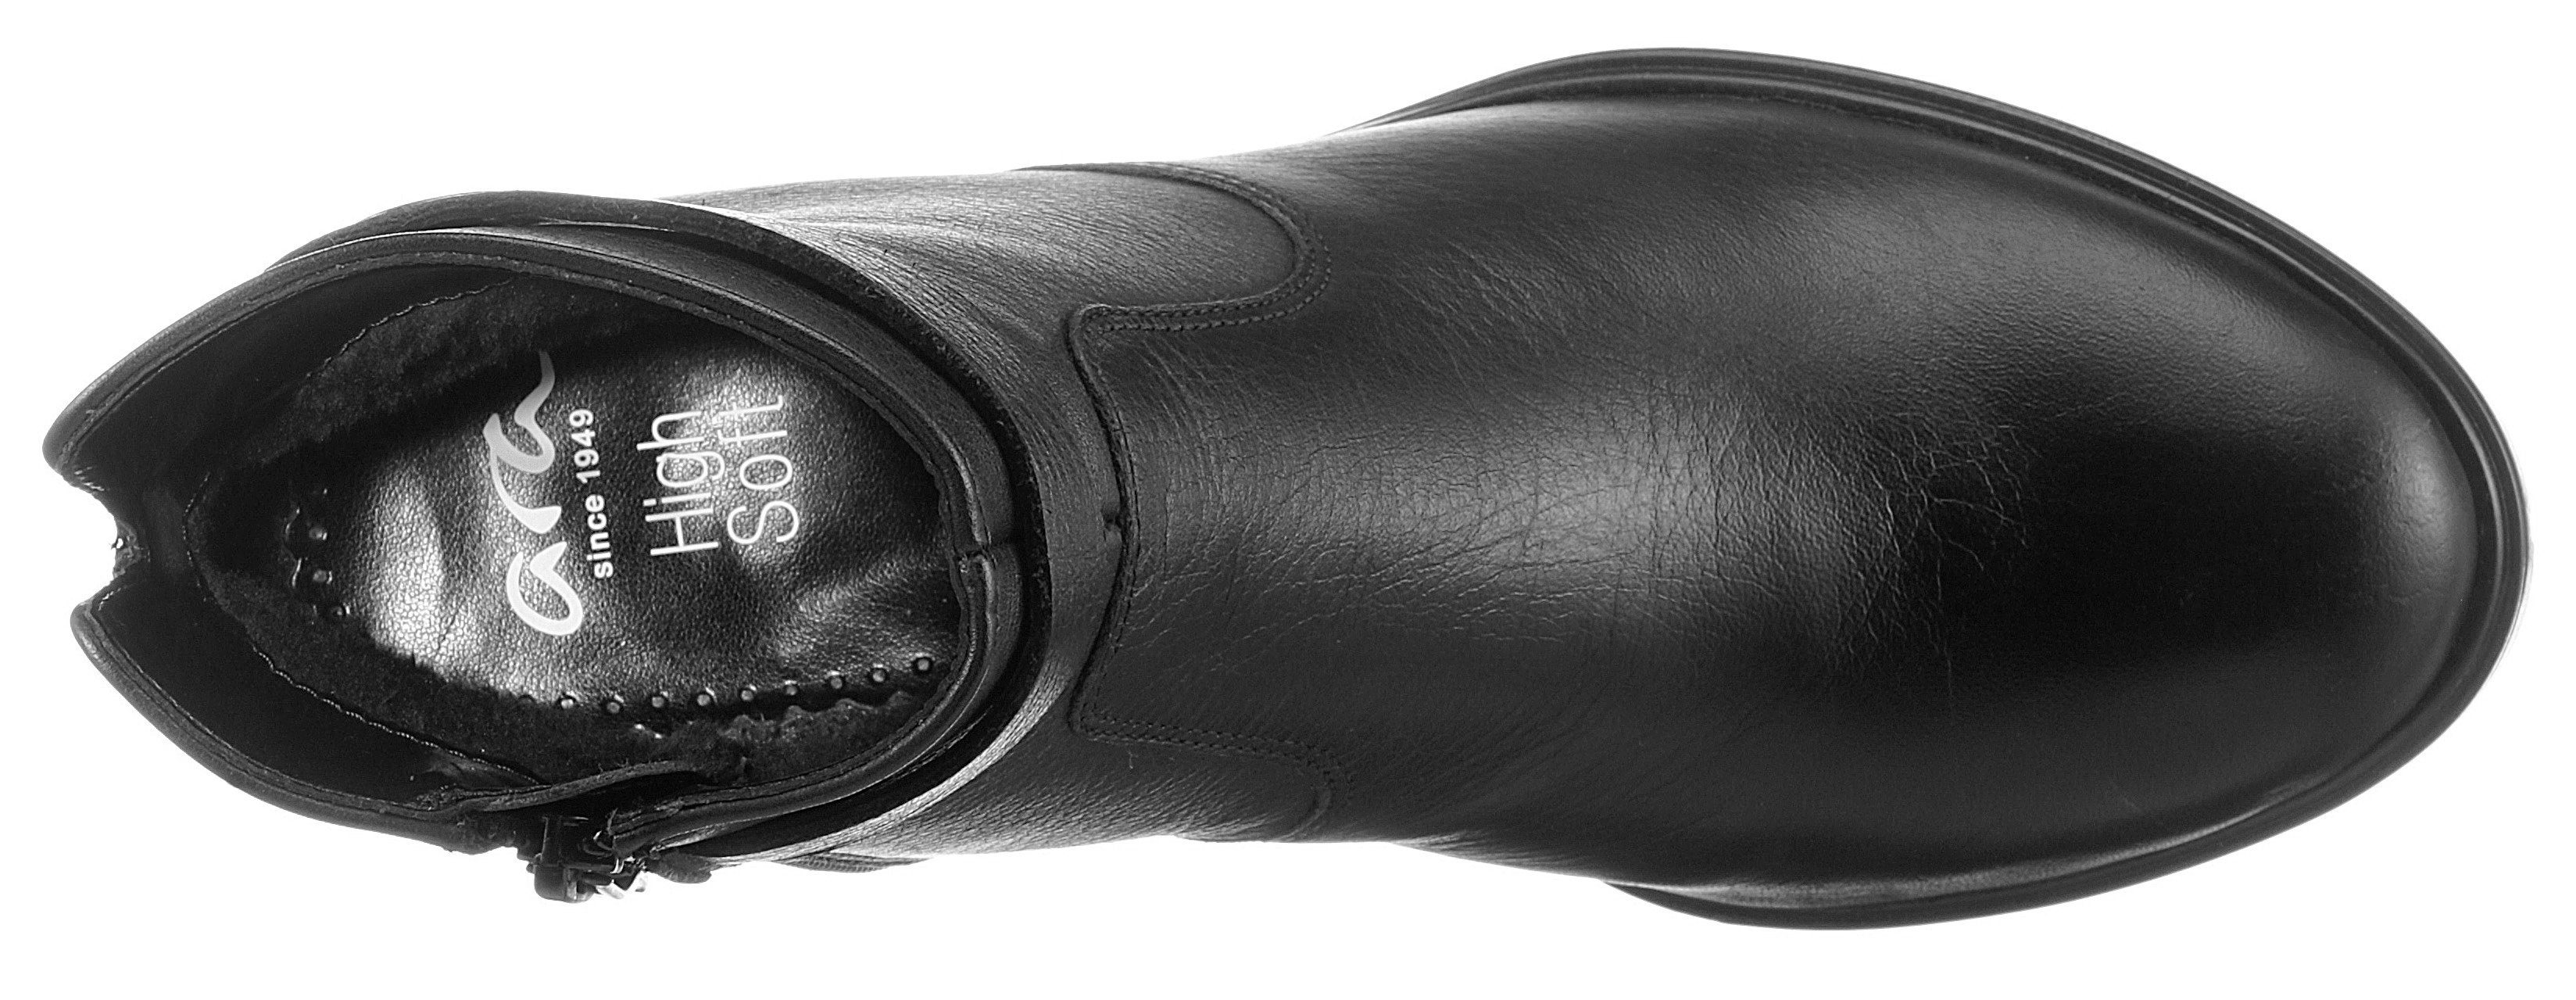 Ara RONDA Stiefelette Optik, schwarz in klassischer G-Weite